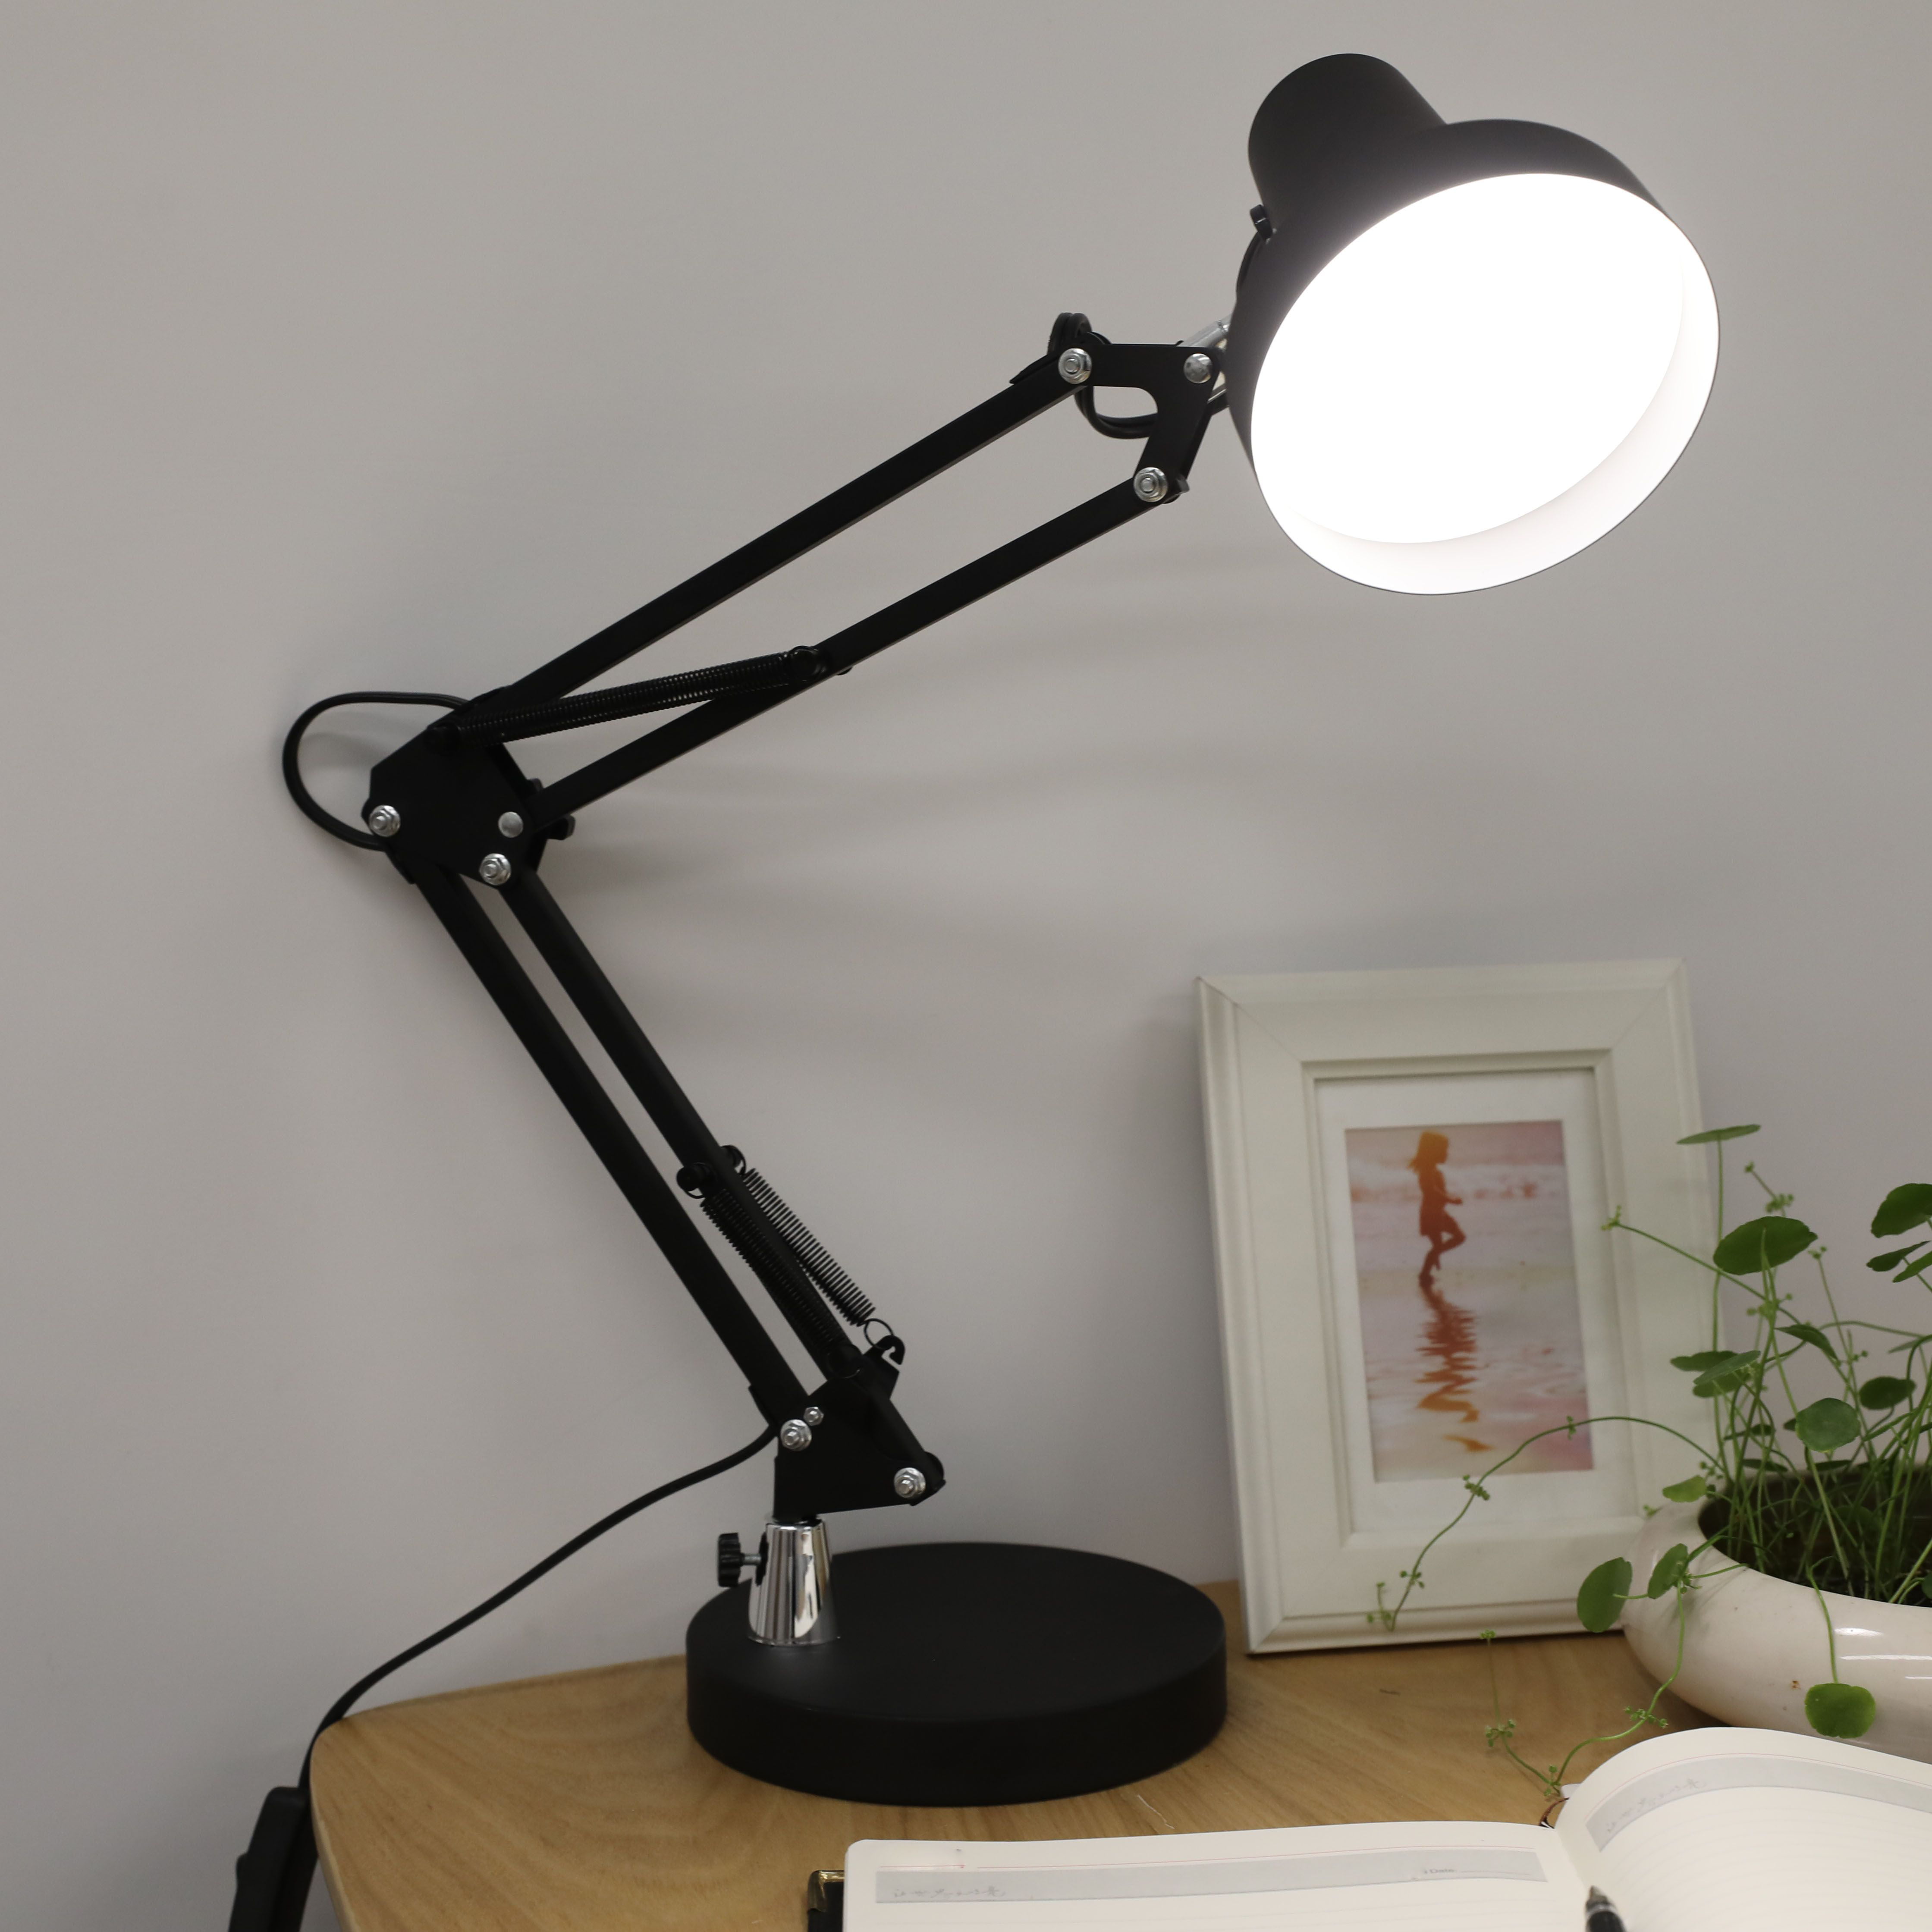 Architect Desk Lamp with 4 Watt LED